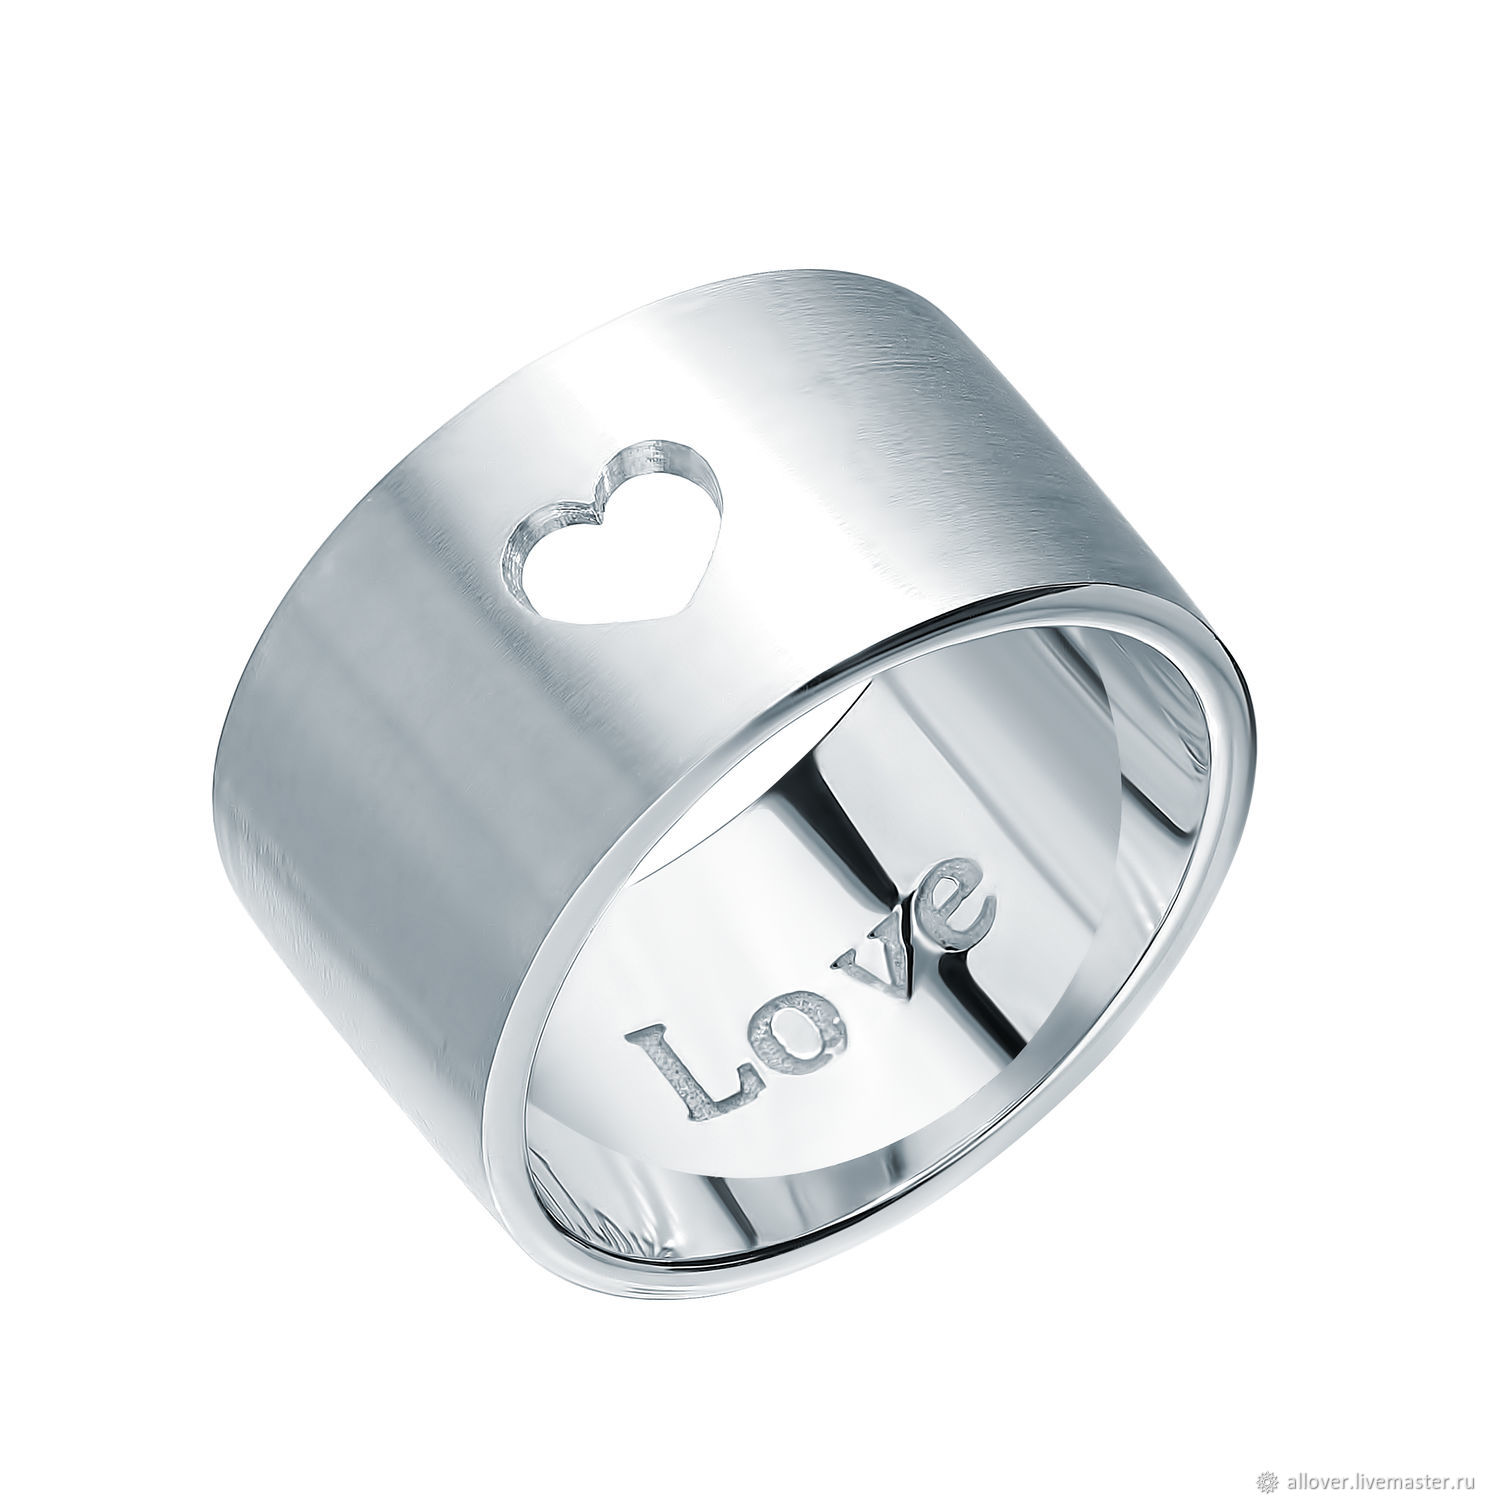 Серебряное кольцо со словом "Love" серебро 925 пробы, Кольца, Москва,  Фото №1